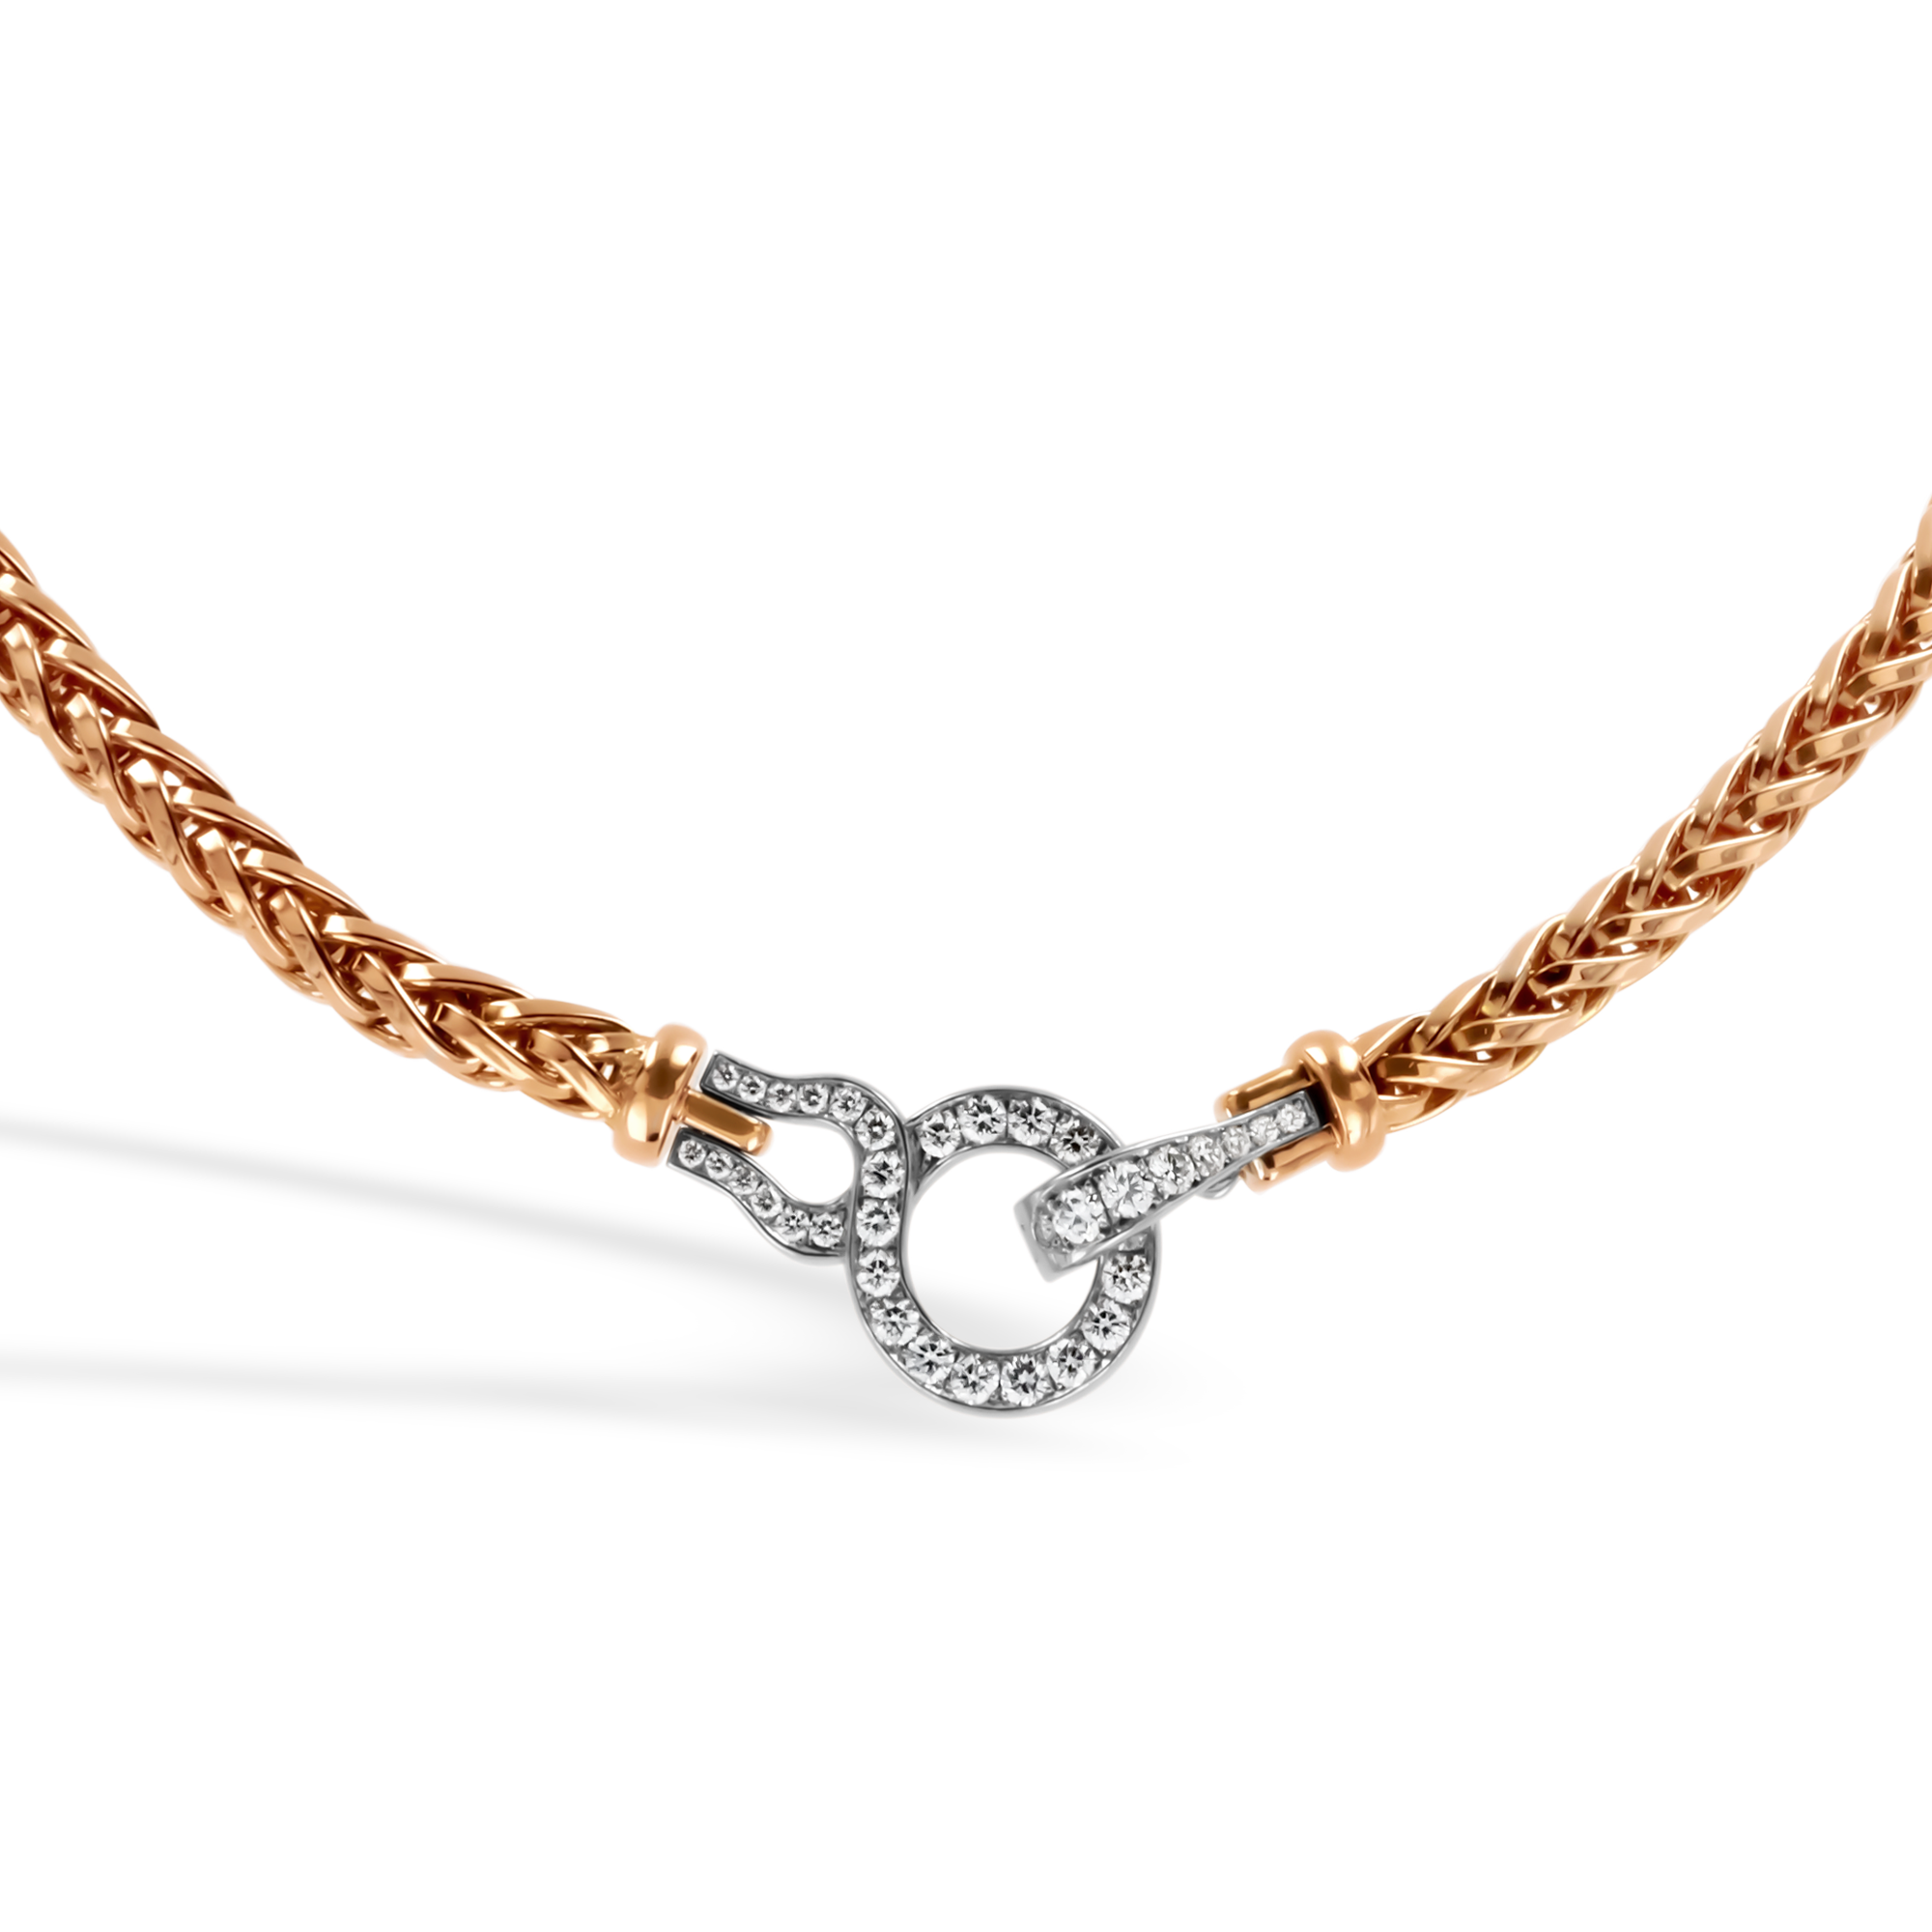 English Chain Necklace with Diamond Clasp Brilliant Cut, Grain Set_2